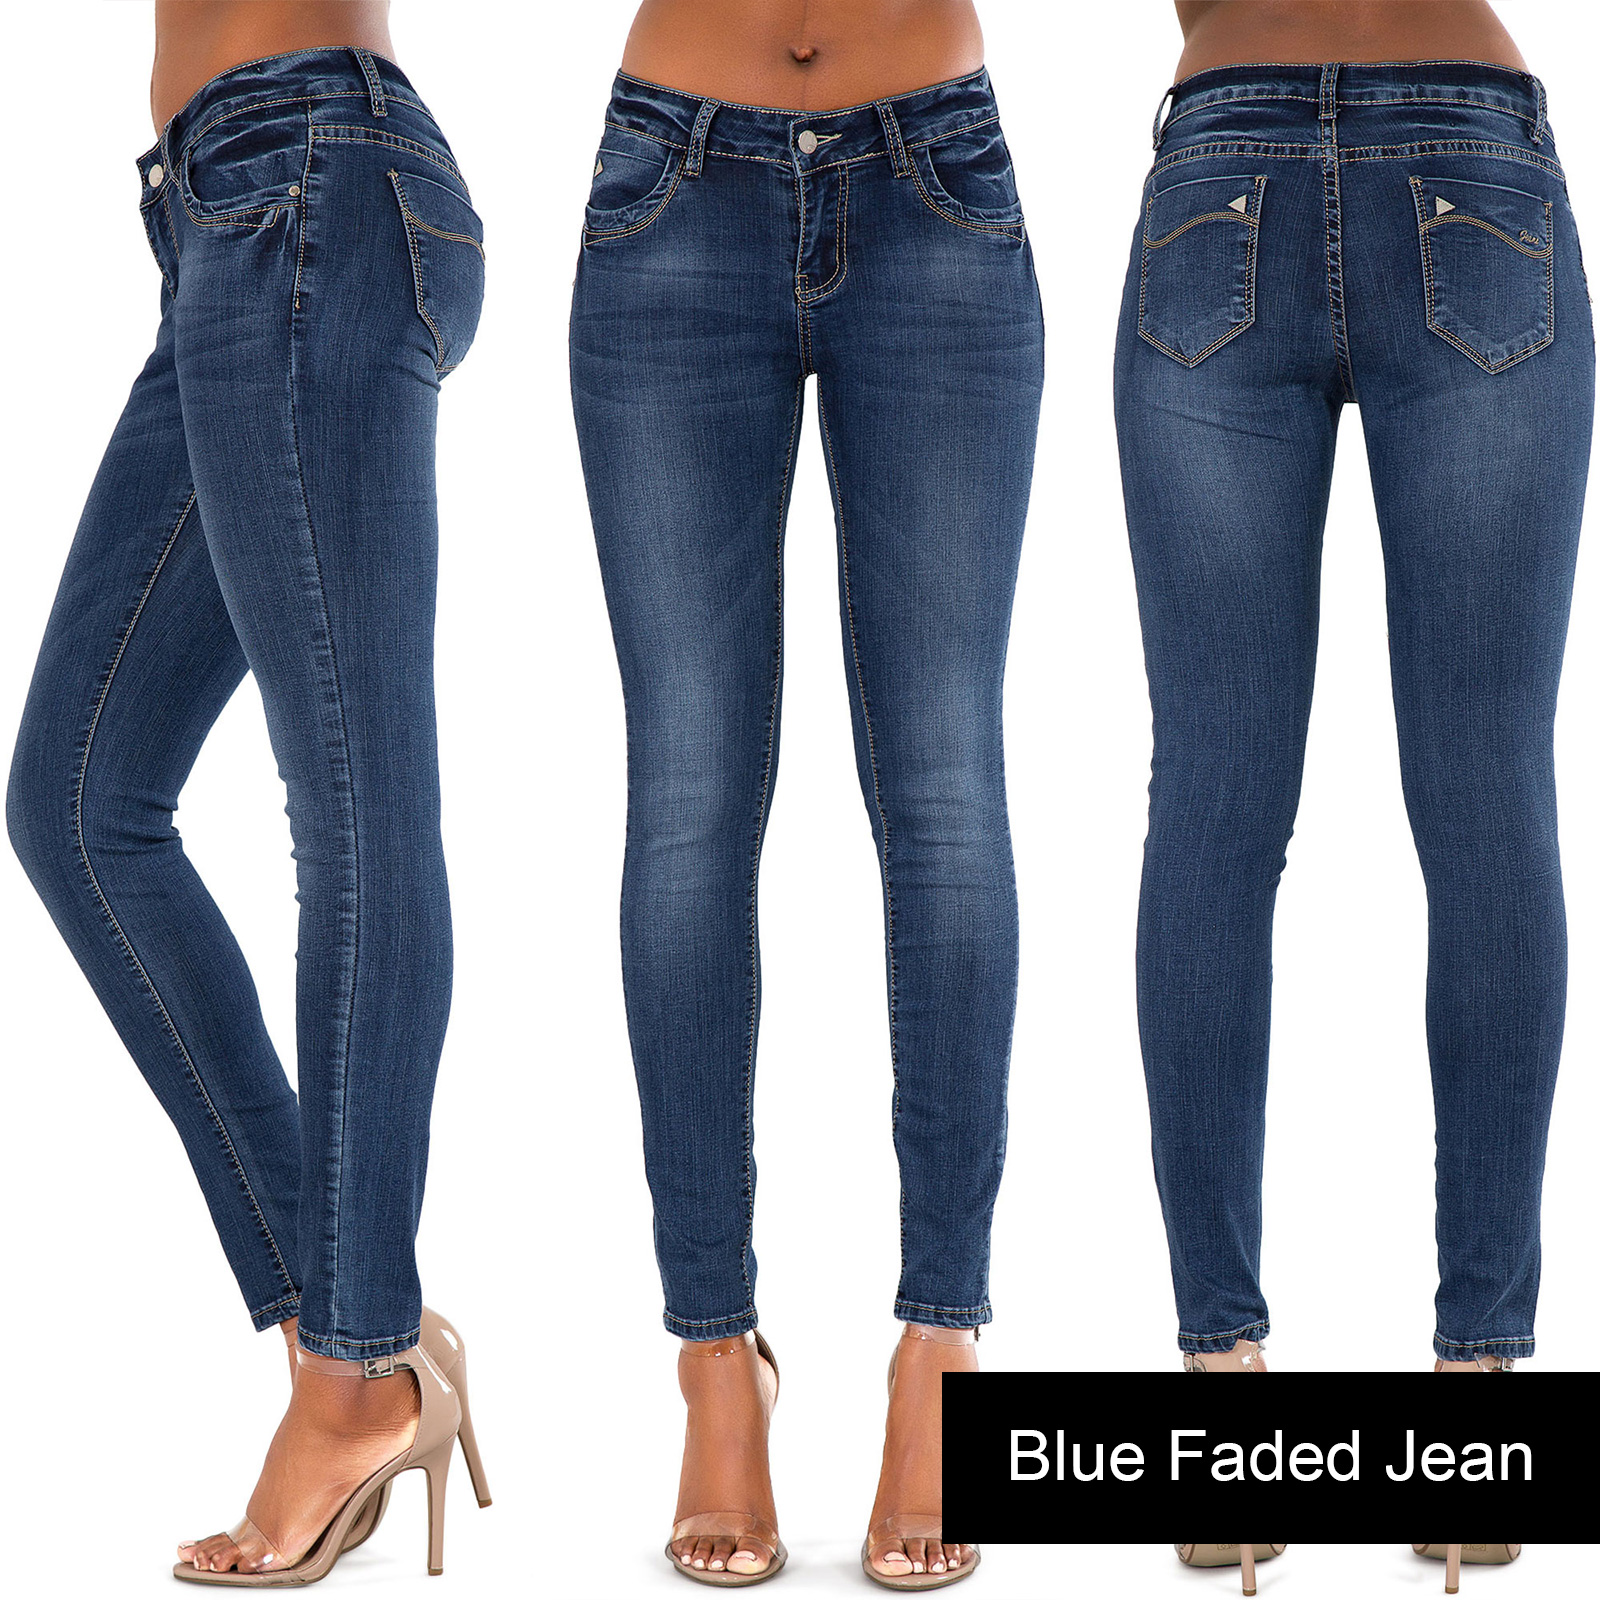 Ladies Women Acid Wash Blue Grey Skinny Jeans Stretch Trouser Size 6 8 ...